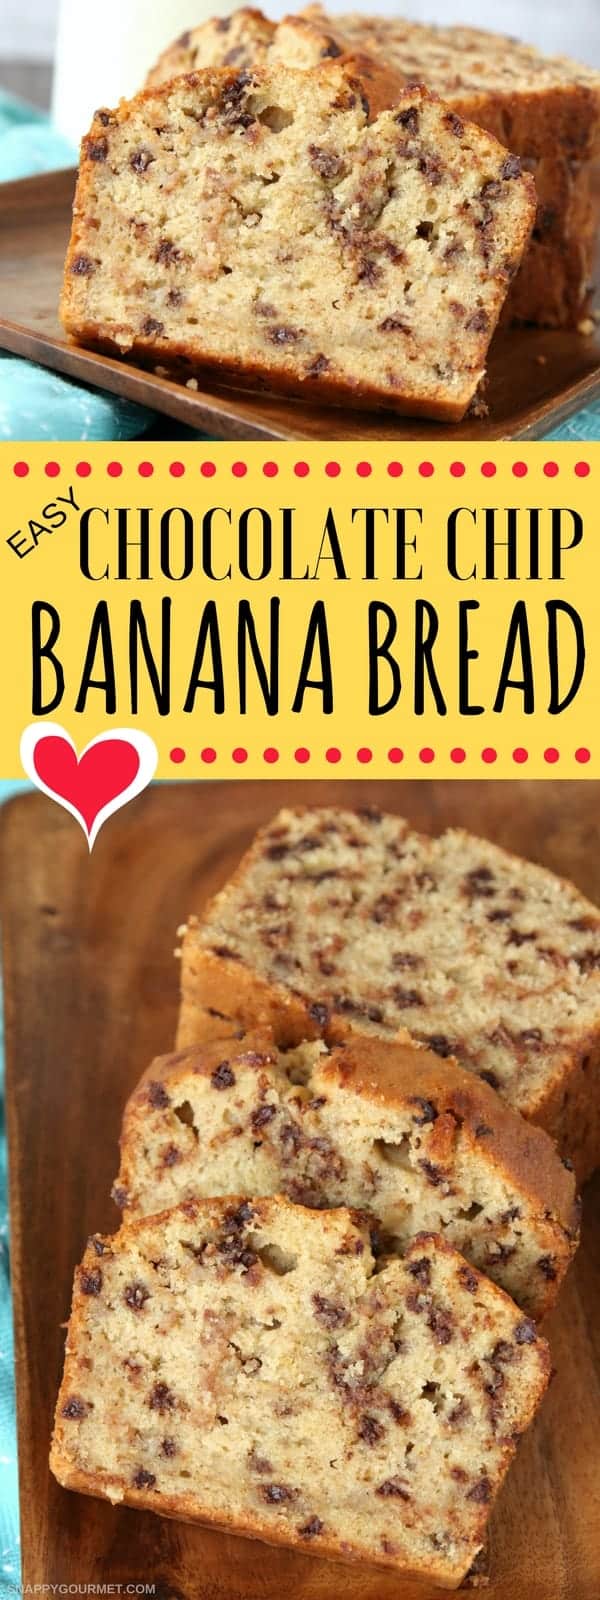 Easy Chocolate Chip Banana Bread Recipe (One-Bowl) - Snappy Gourmet